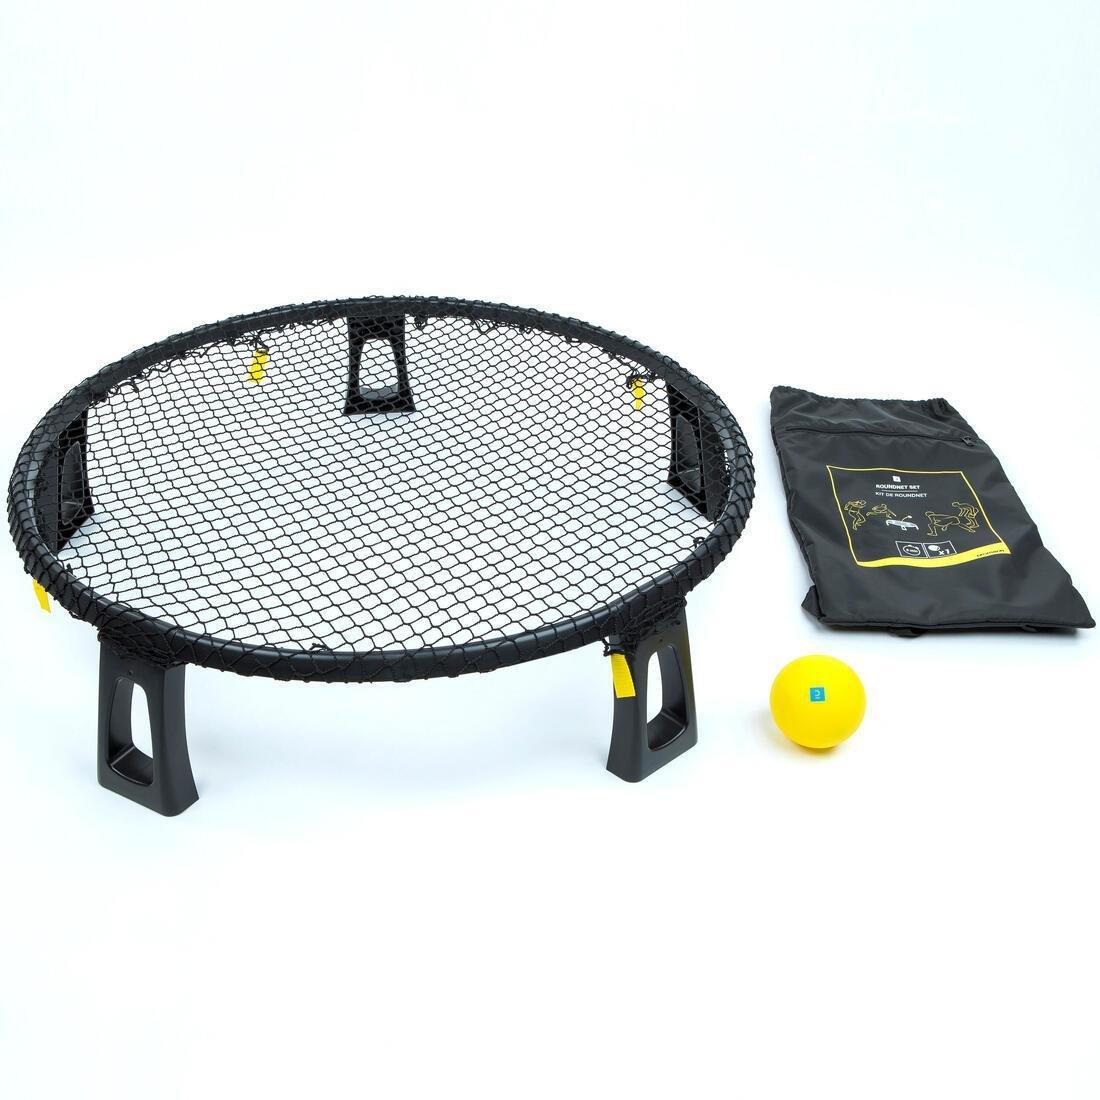 COPAYA - Roundnet Set - Recycled, Black